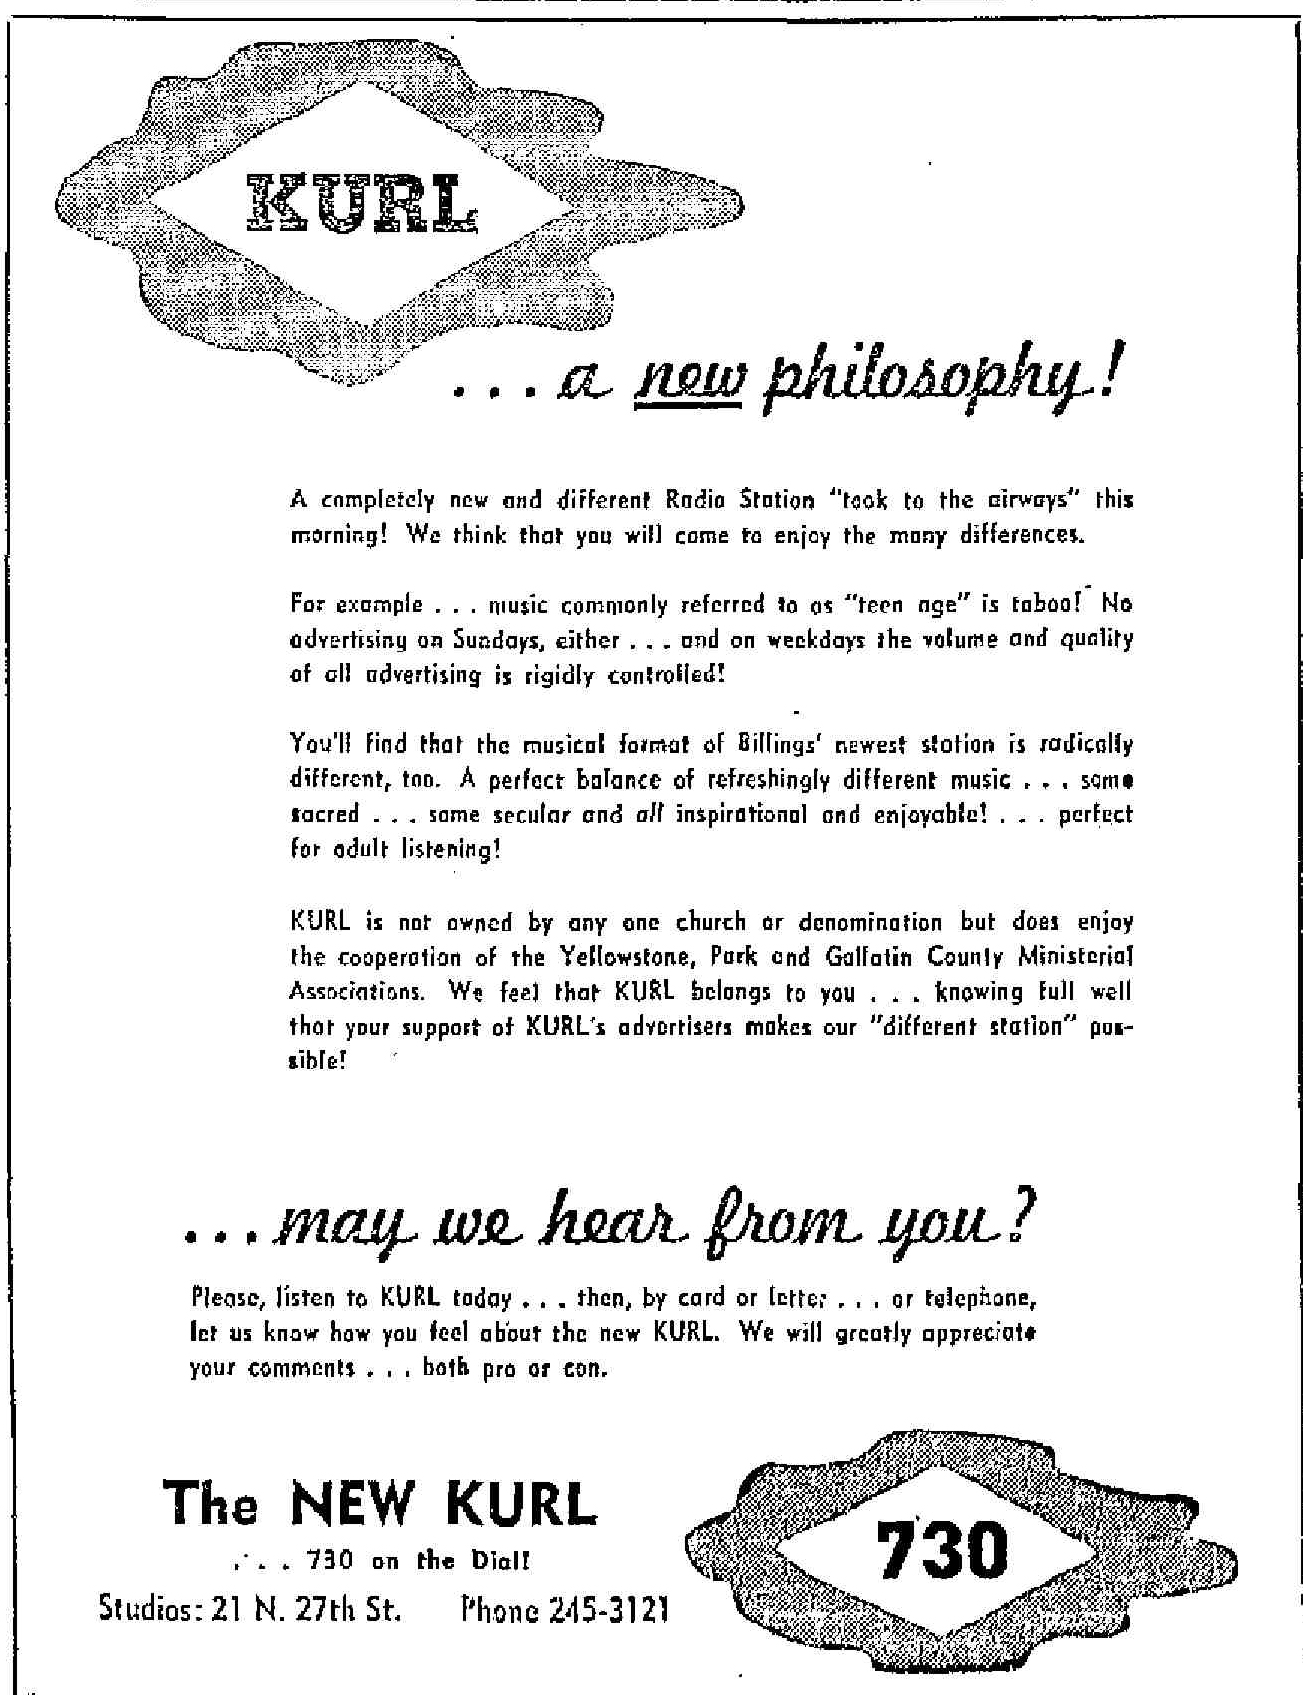 KURL Radio 730 Billings, Montana 1962 Print Ad